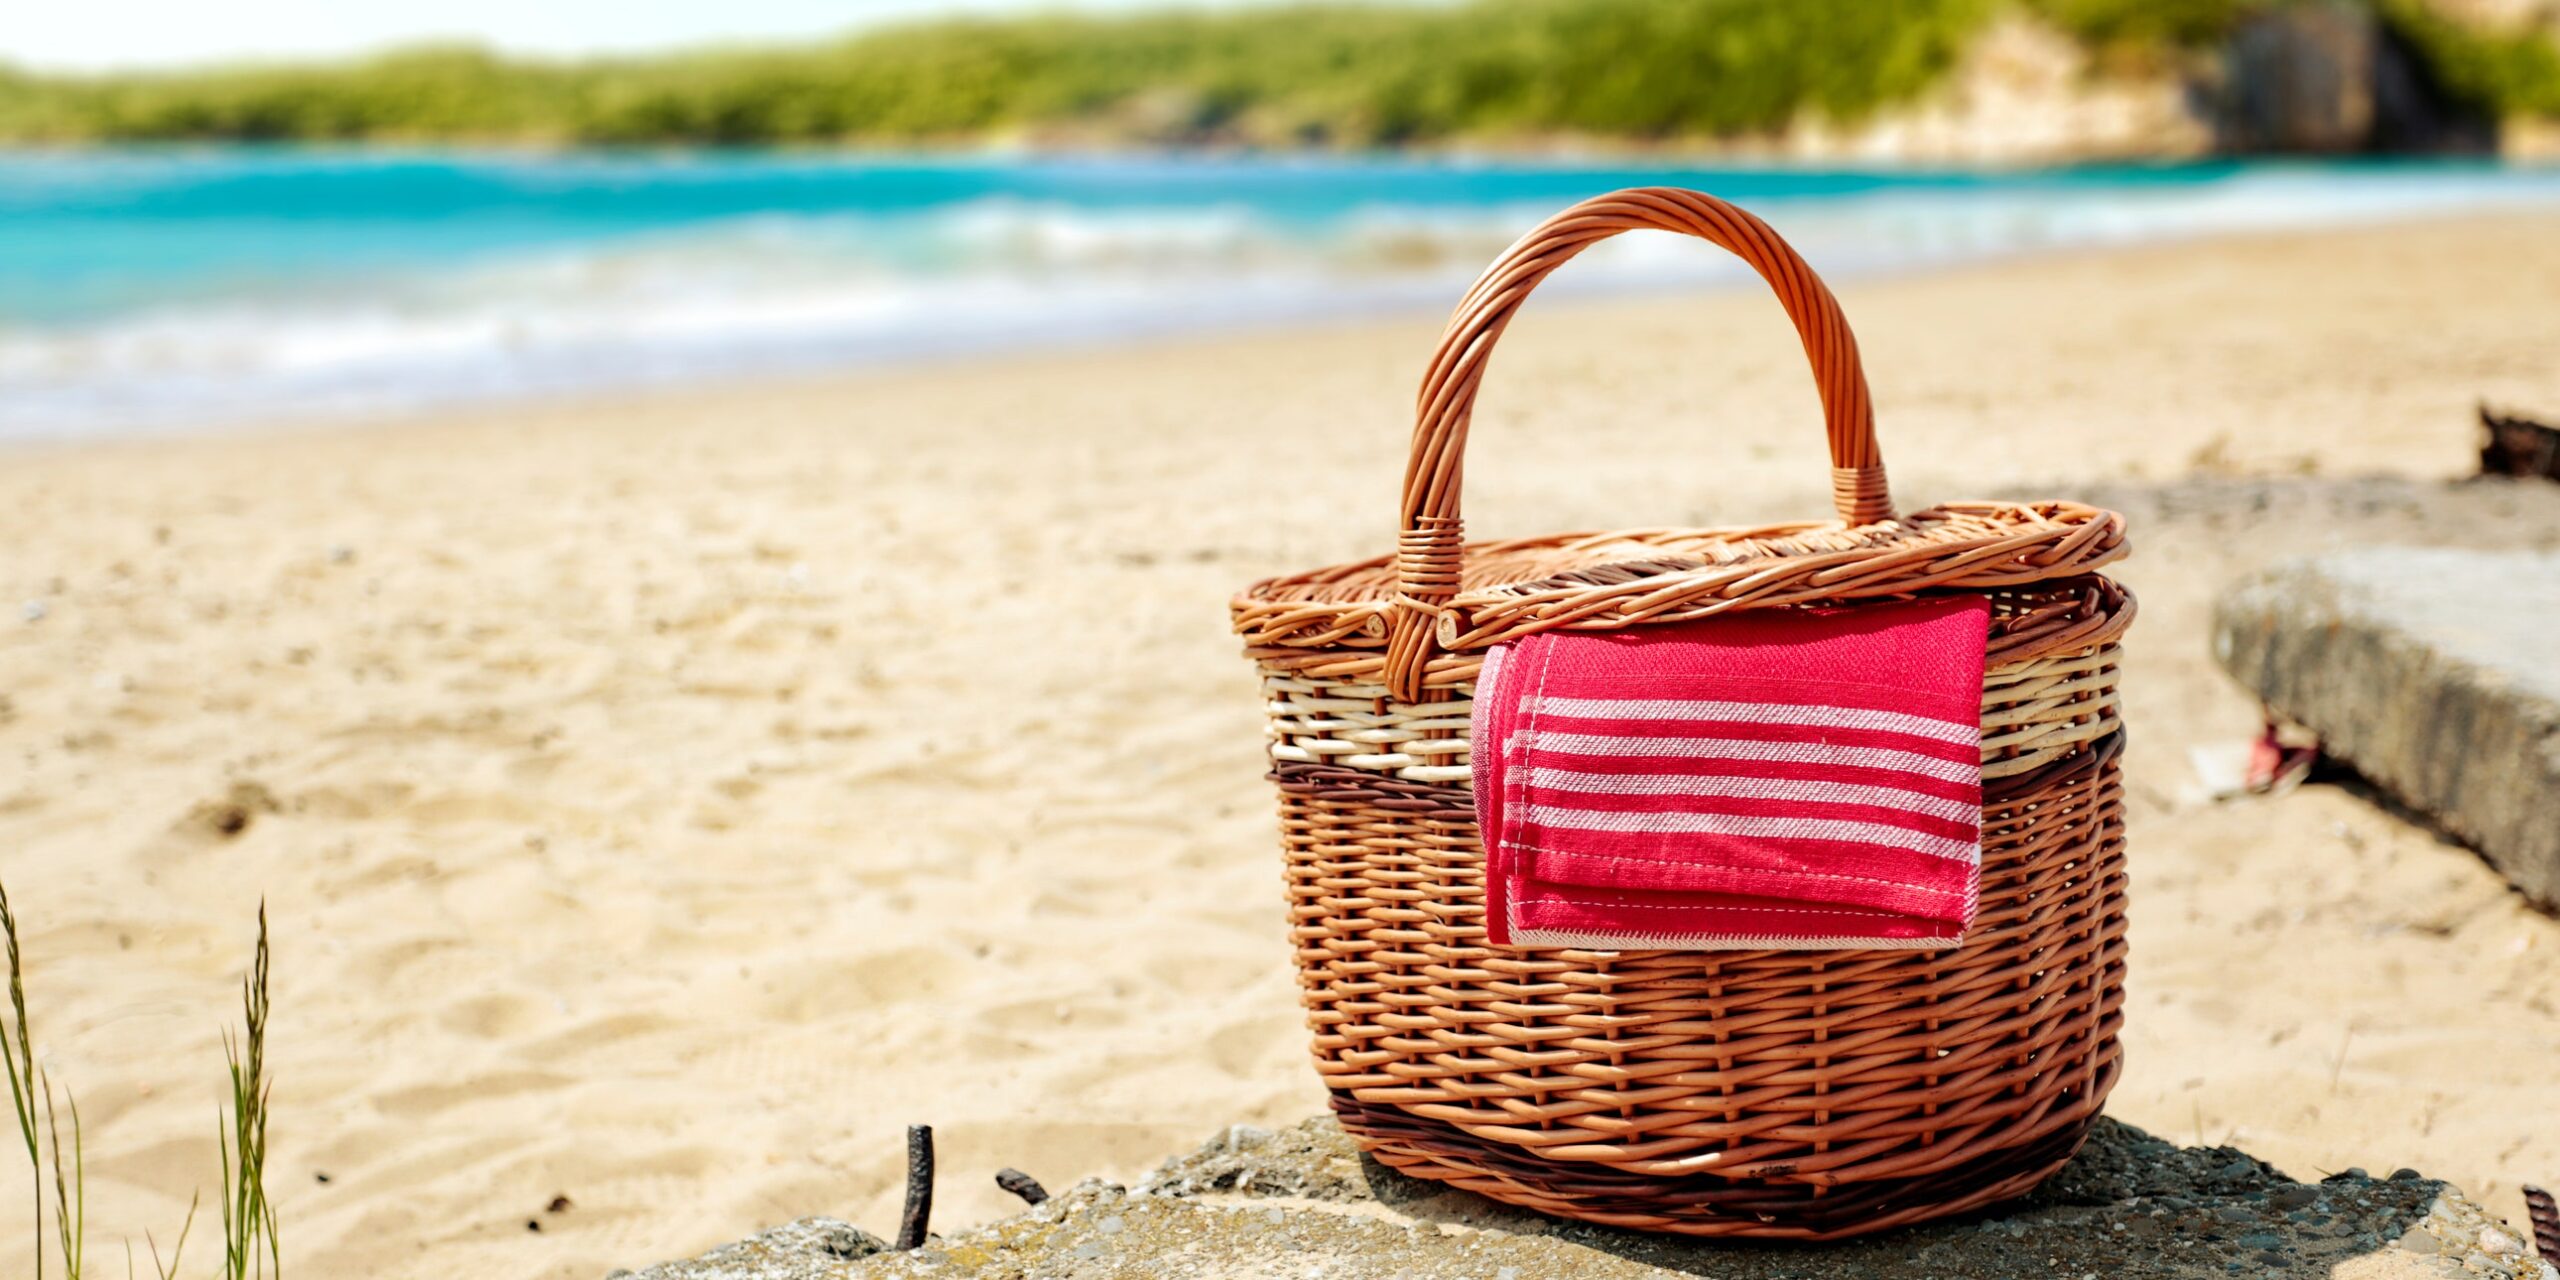 15 Delicious Beach Picnic Recipe Ideas You Need This Summer